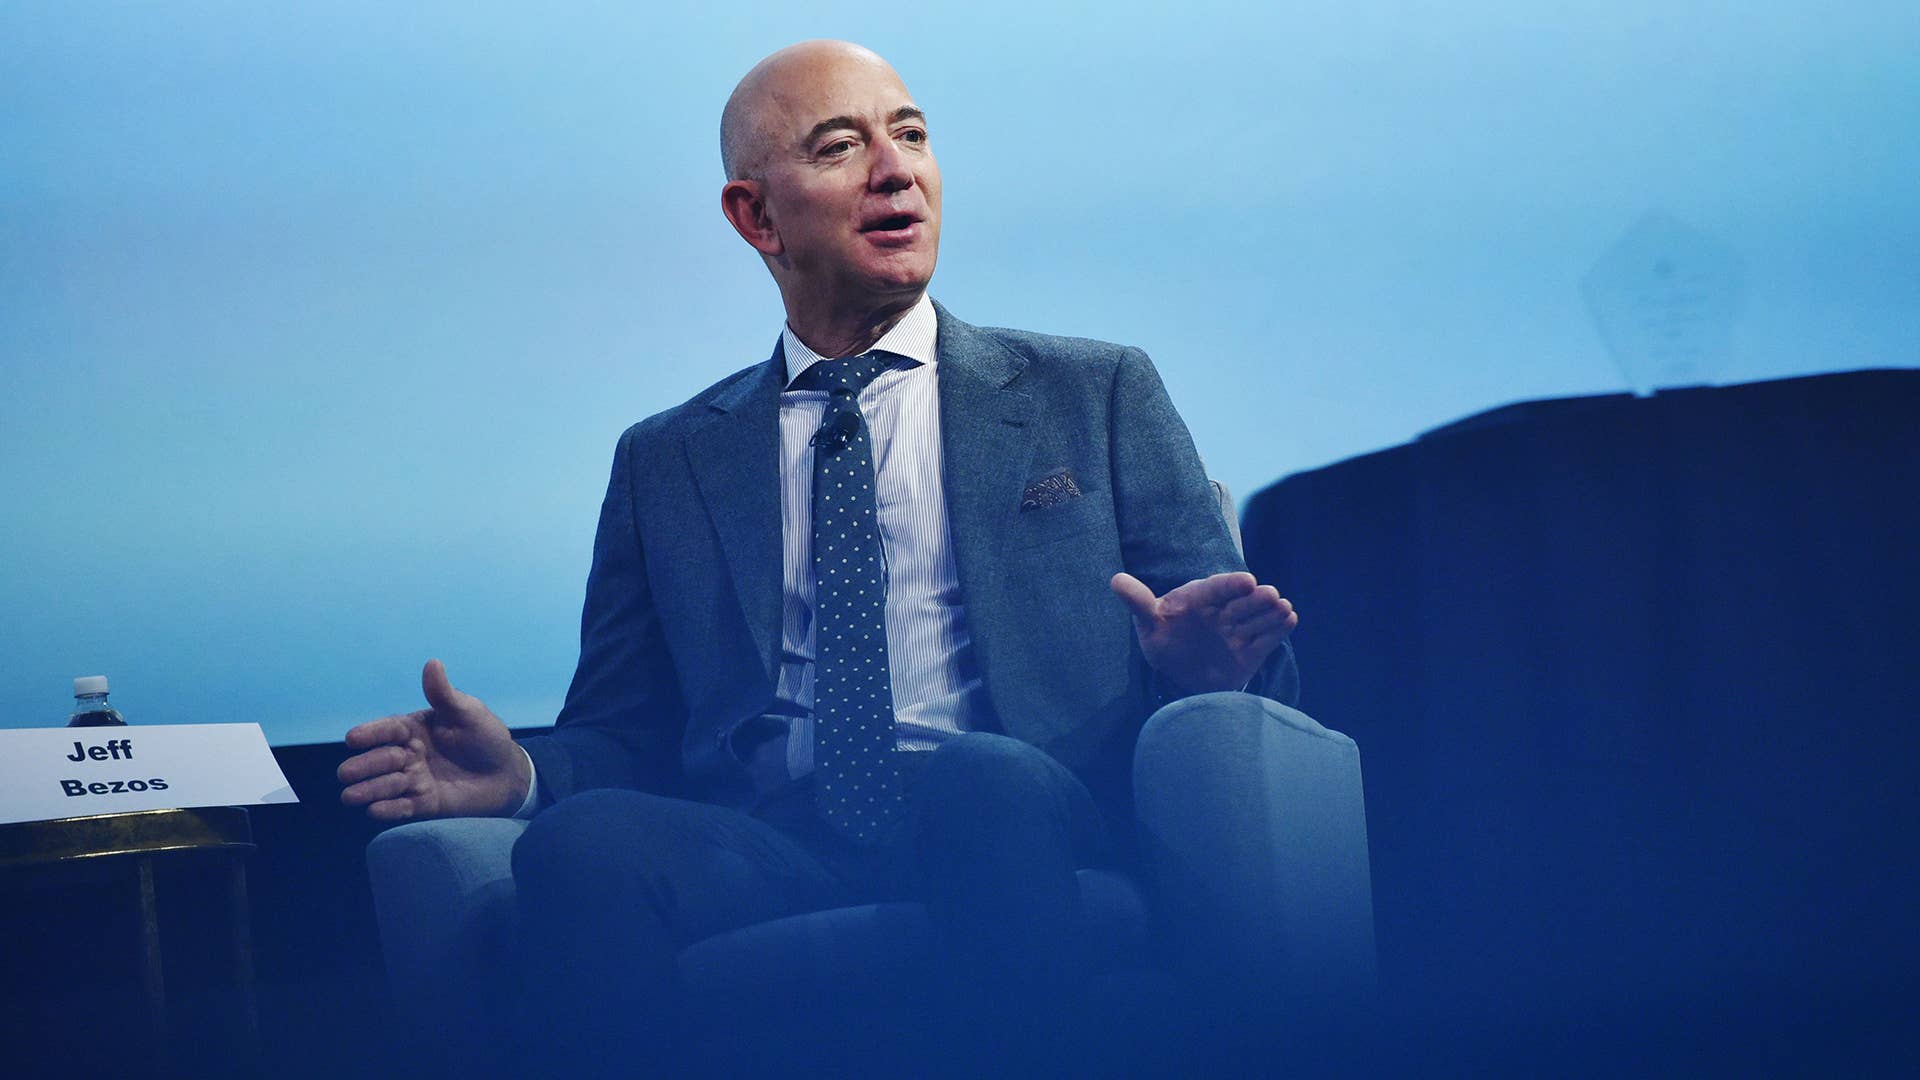 Jeff Bezos, rich man with no drip